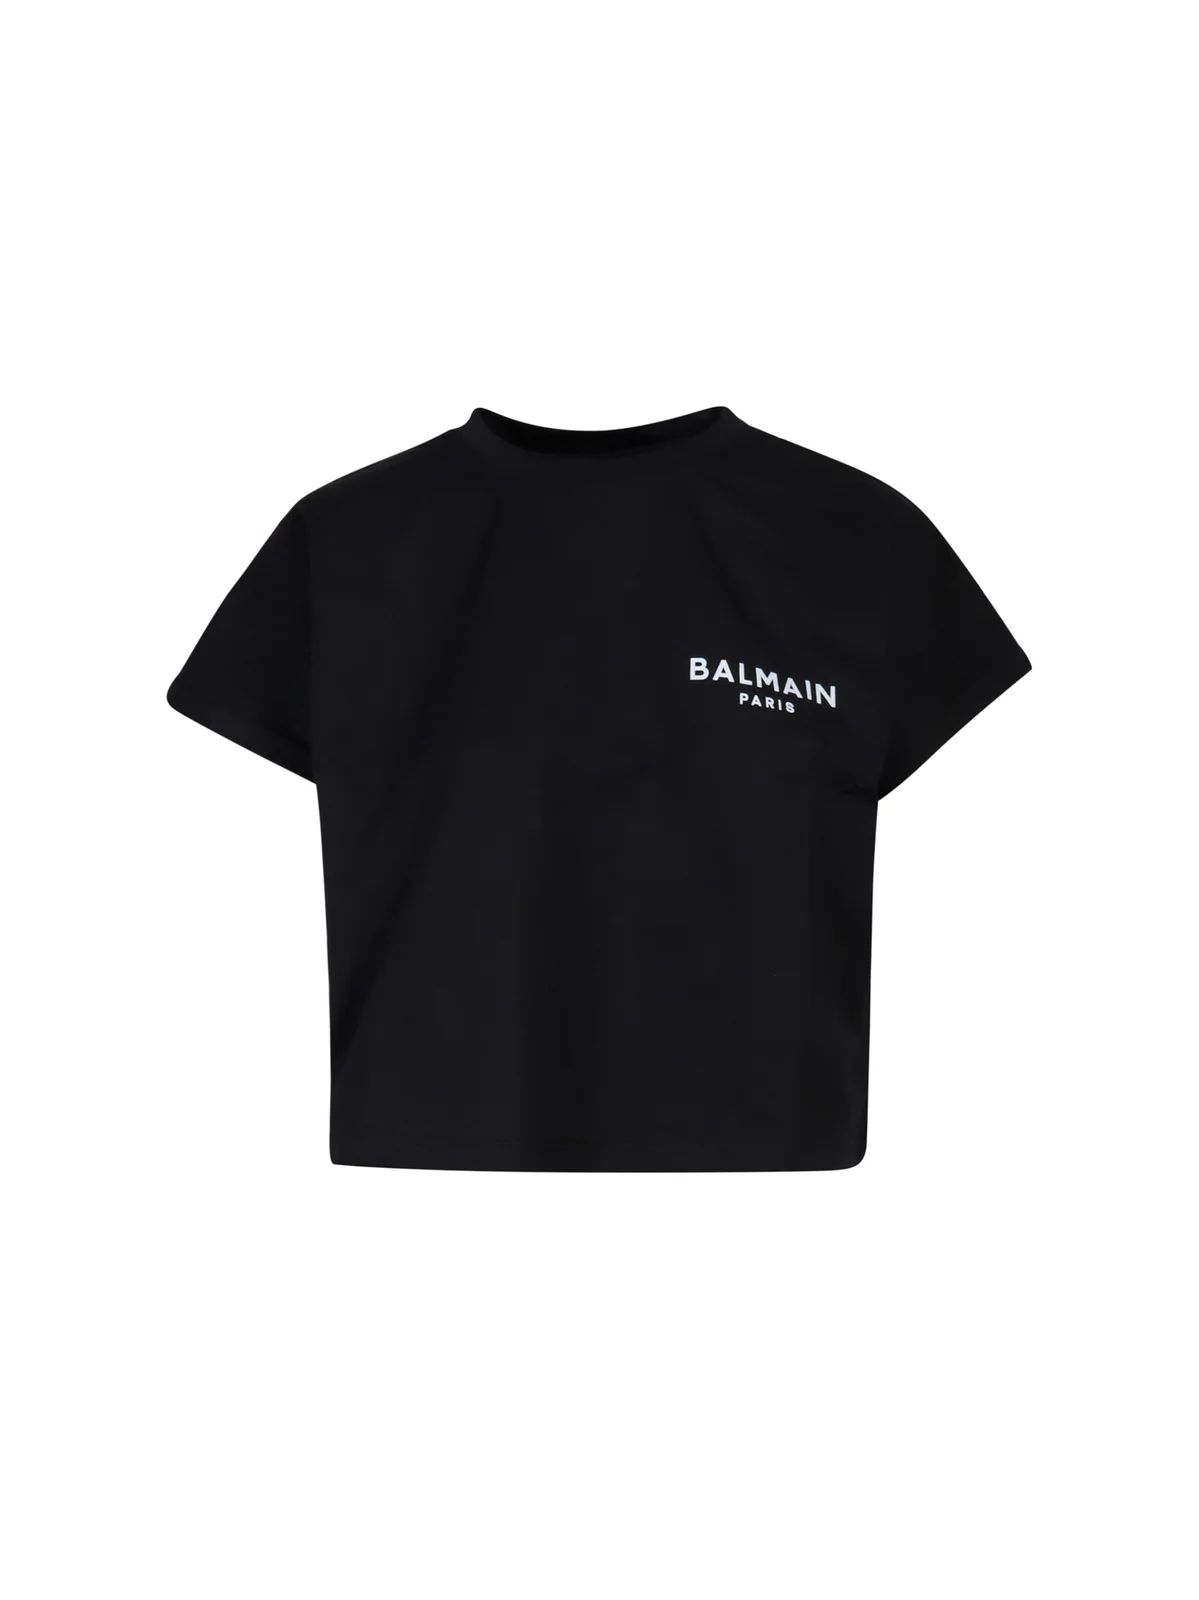 Balmain Logo Printed Cropped T-Shirt | Cettire Global